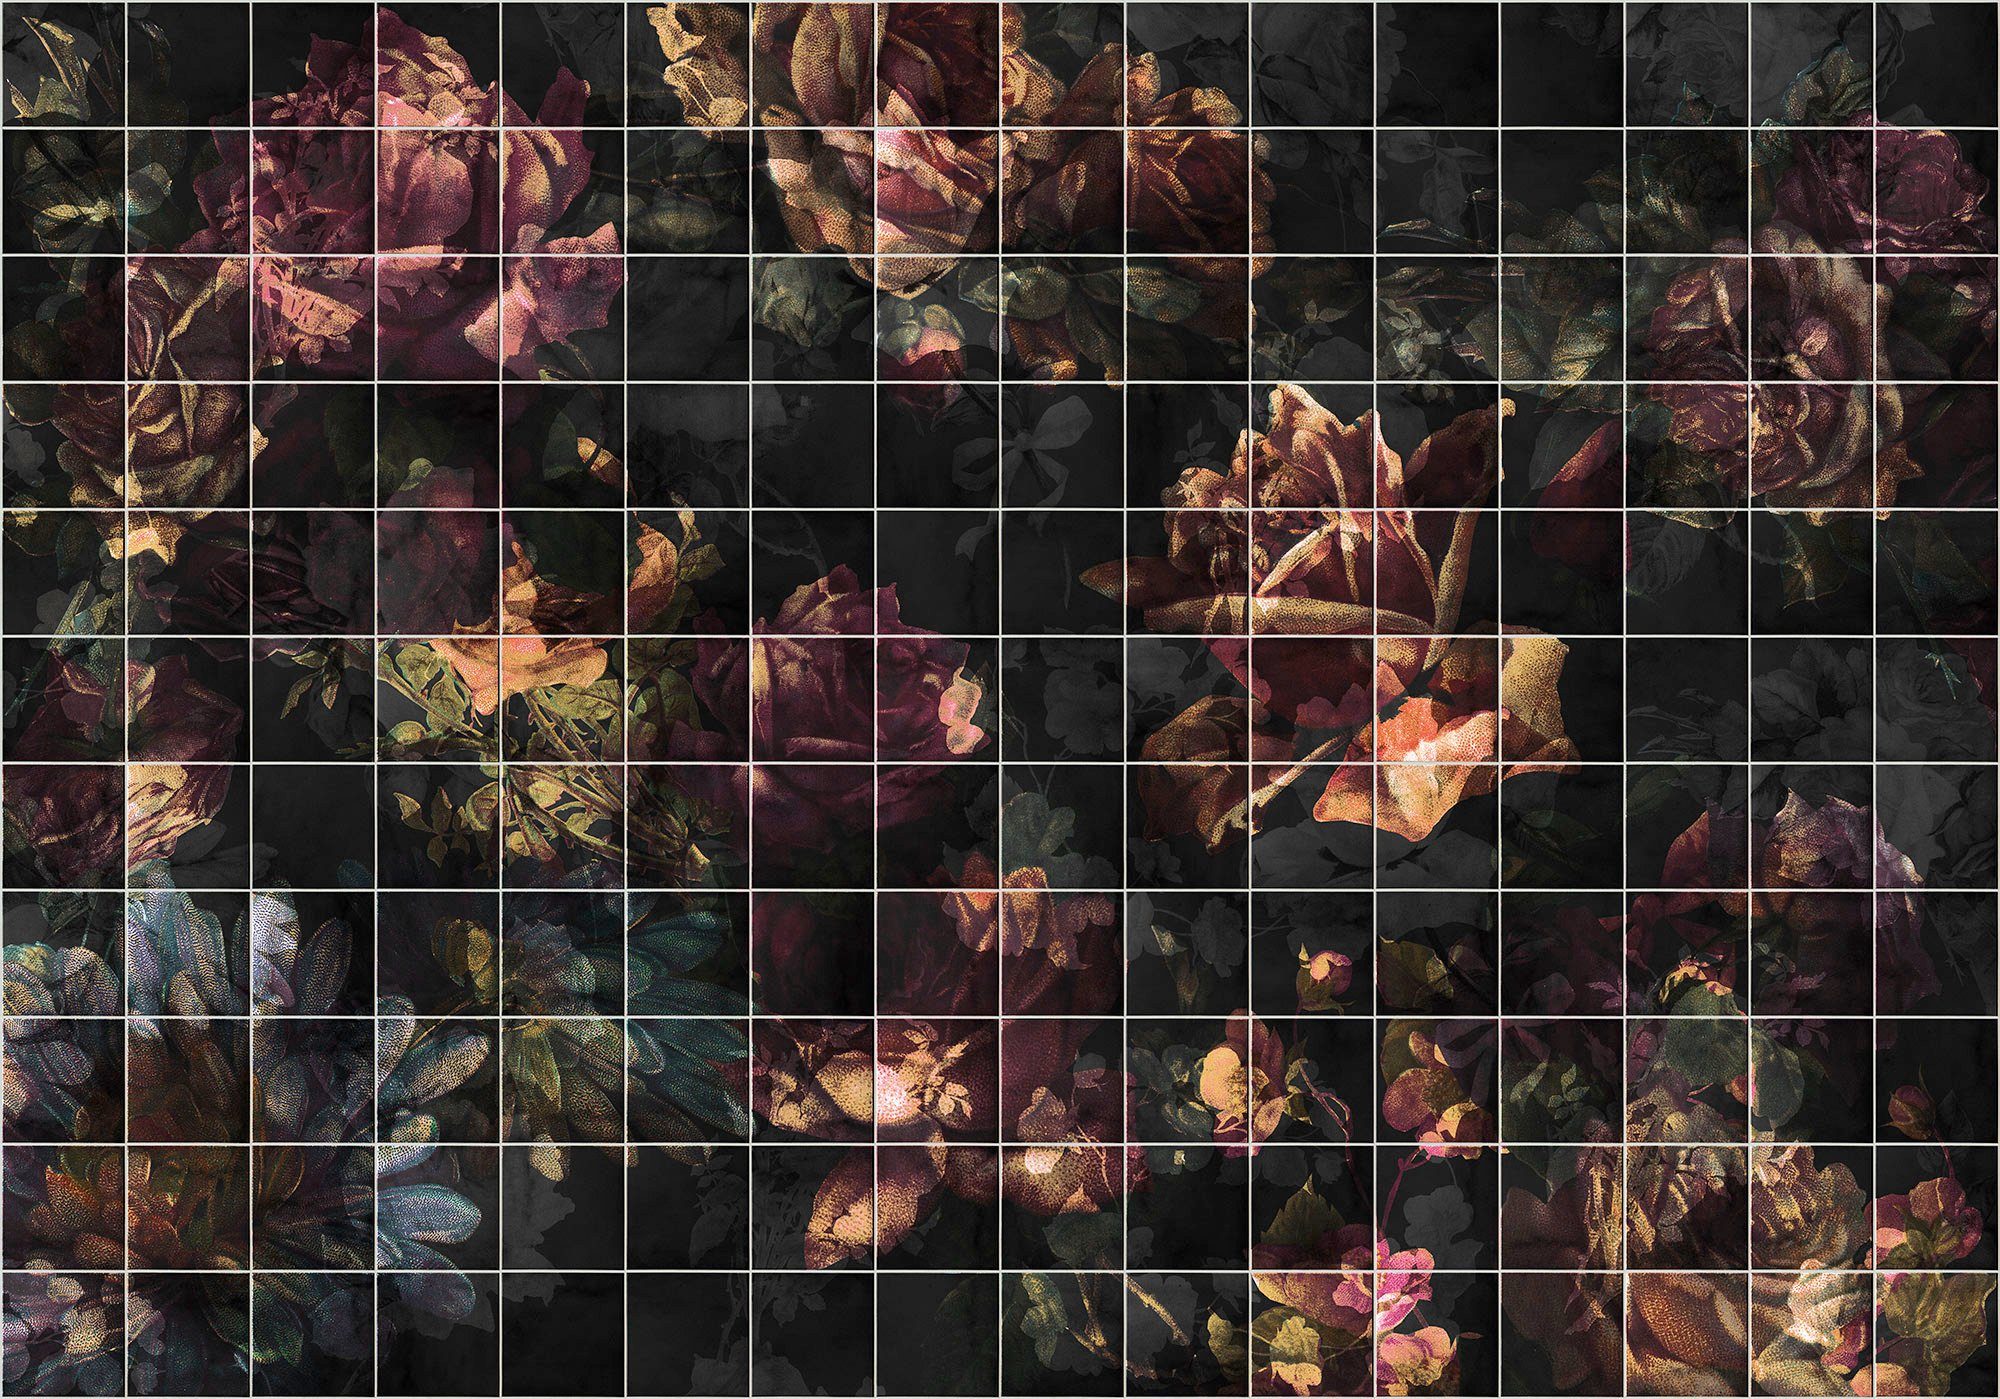 Komar Vliestapete Tiles cm Höhe) (Breite x 400x280 Flowers